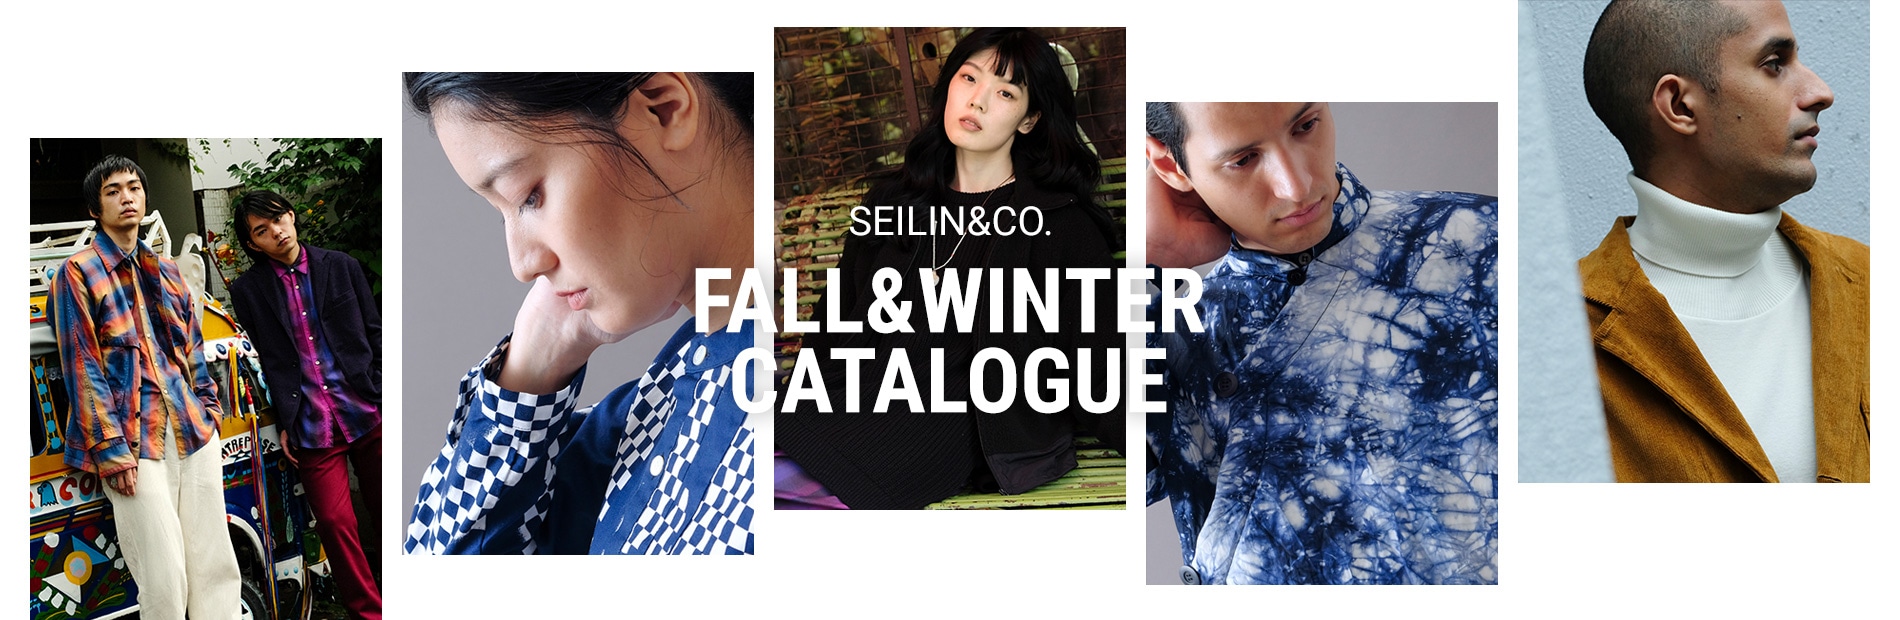 聖林公司2020年Autumn&Winter Catalog